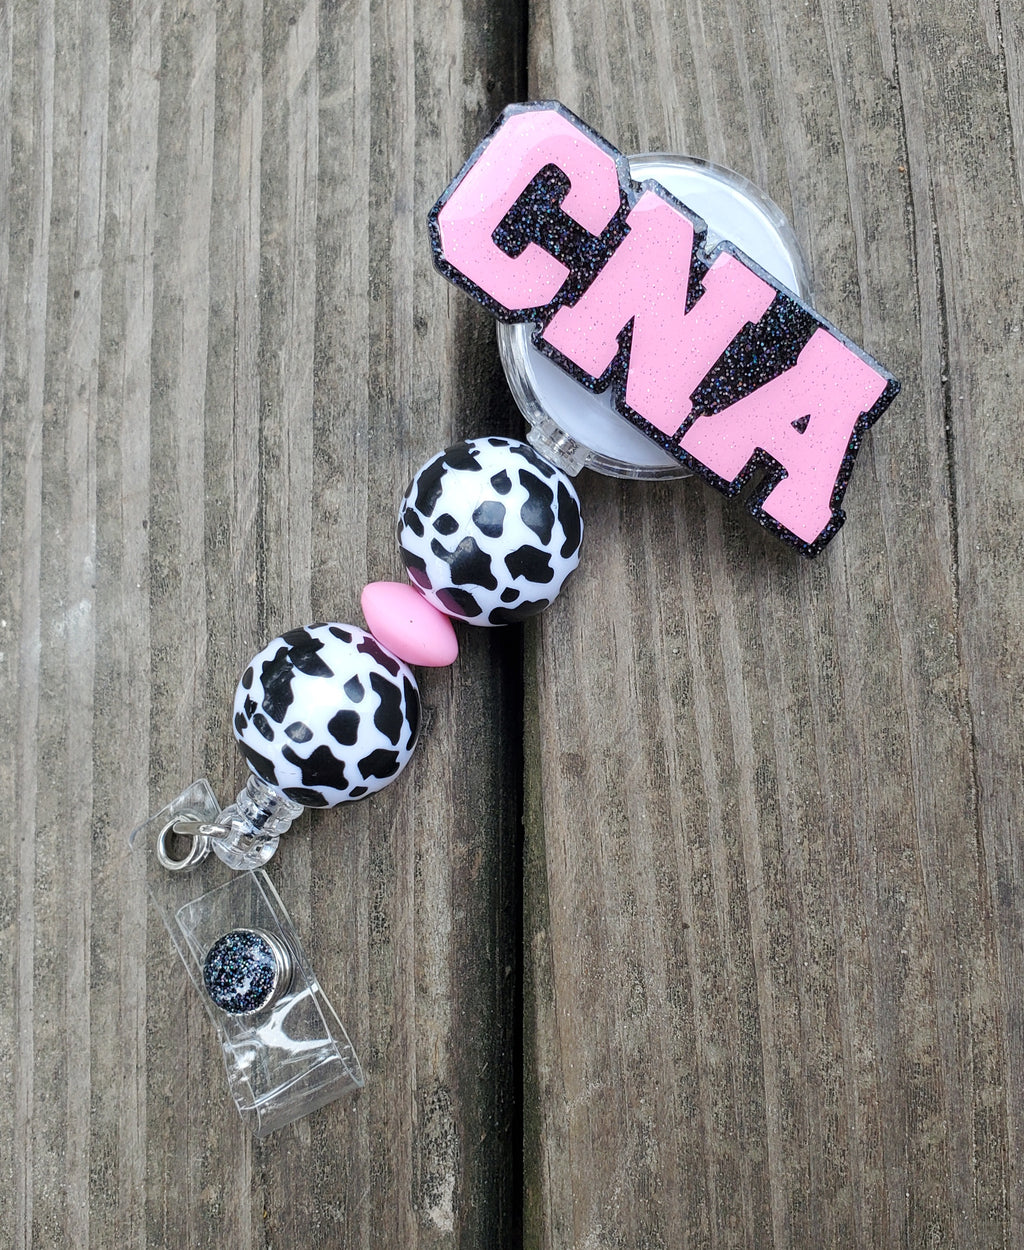 Cna nurse badge reel